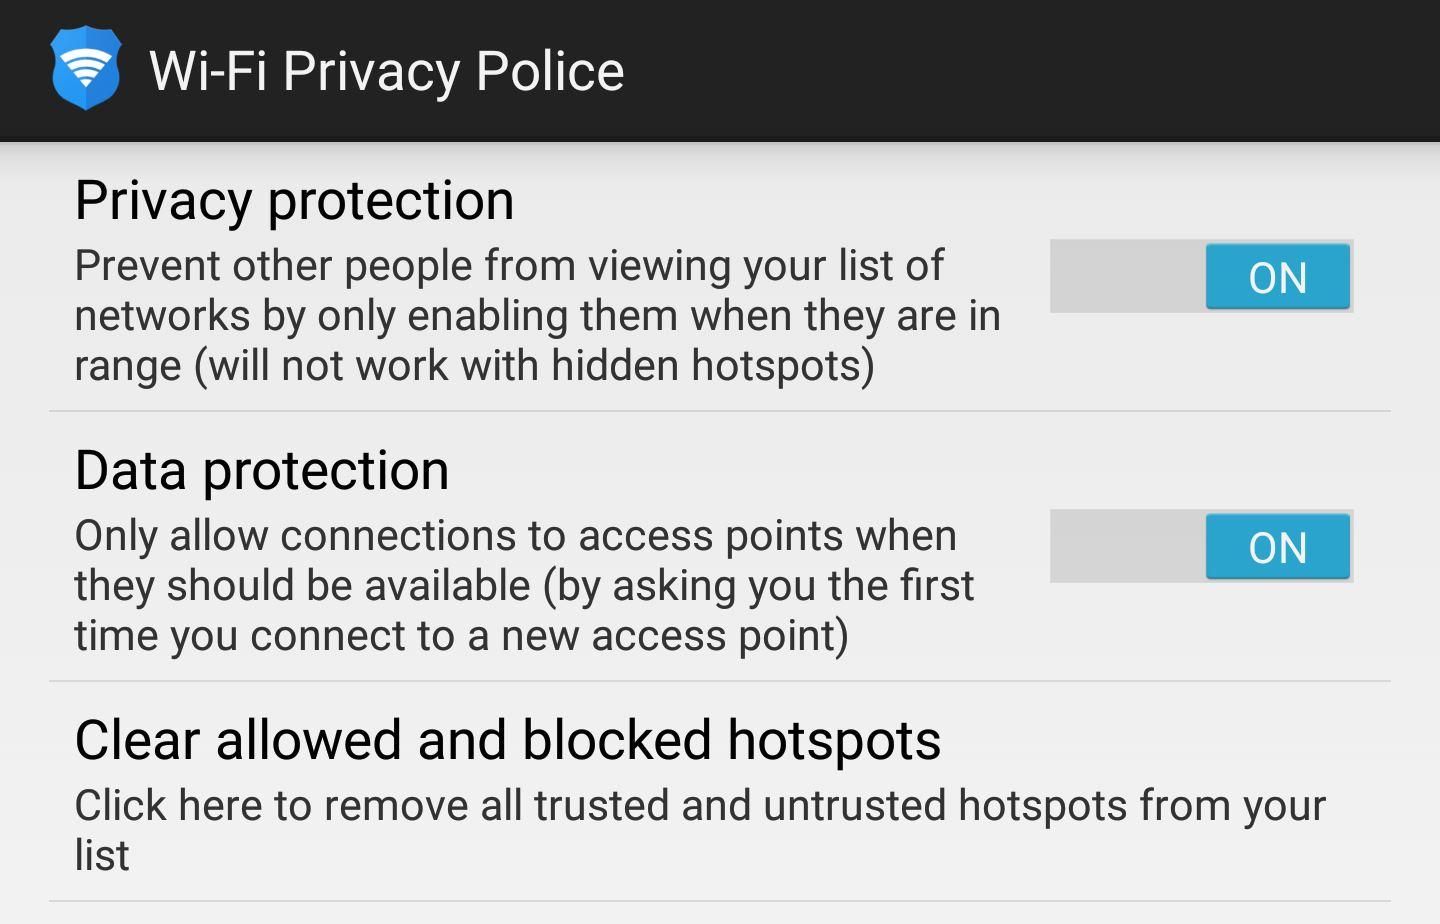 wi-fi privacy police